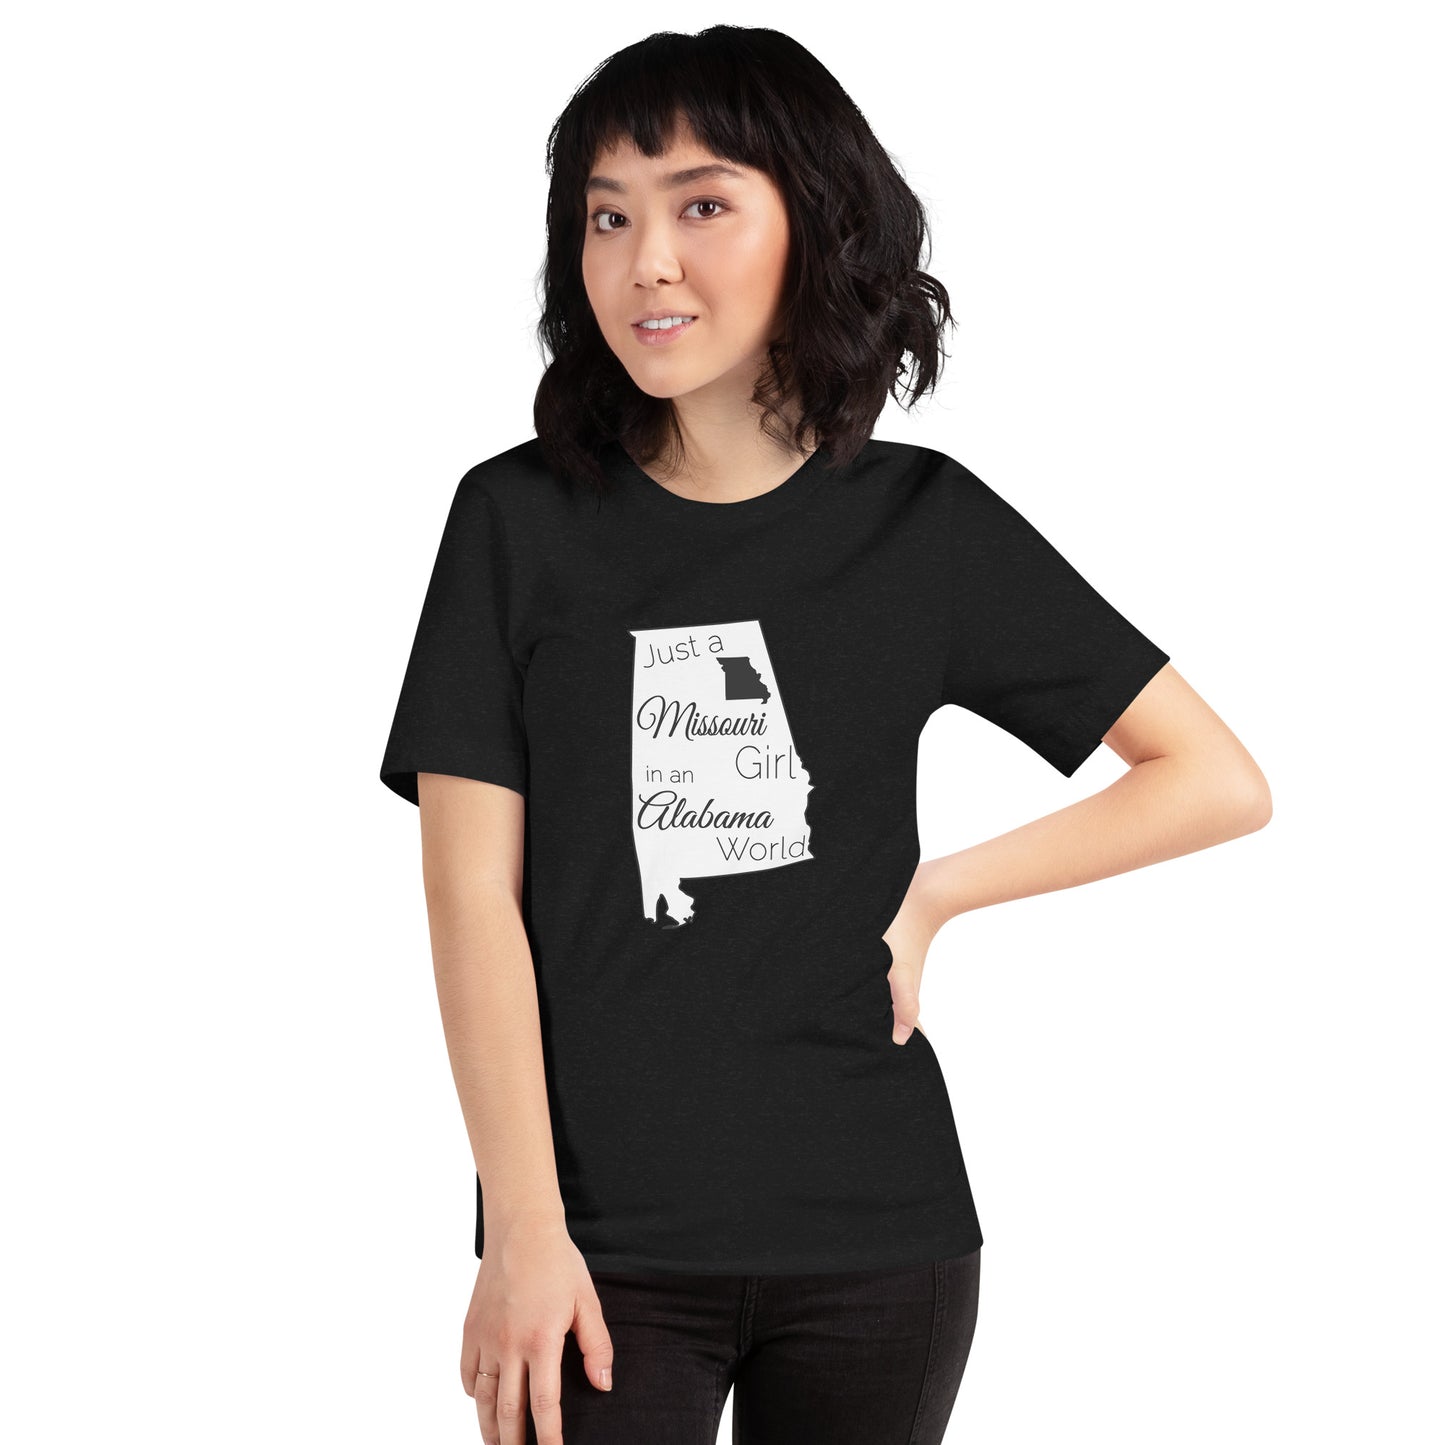 Just a Missouri Girl in an Alabama World Unisex t-shirt